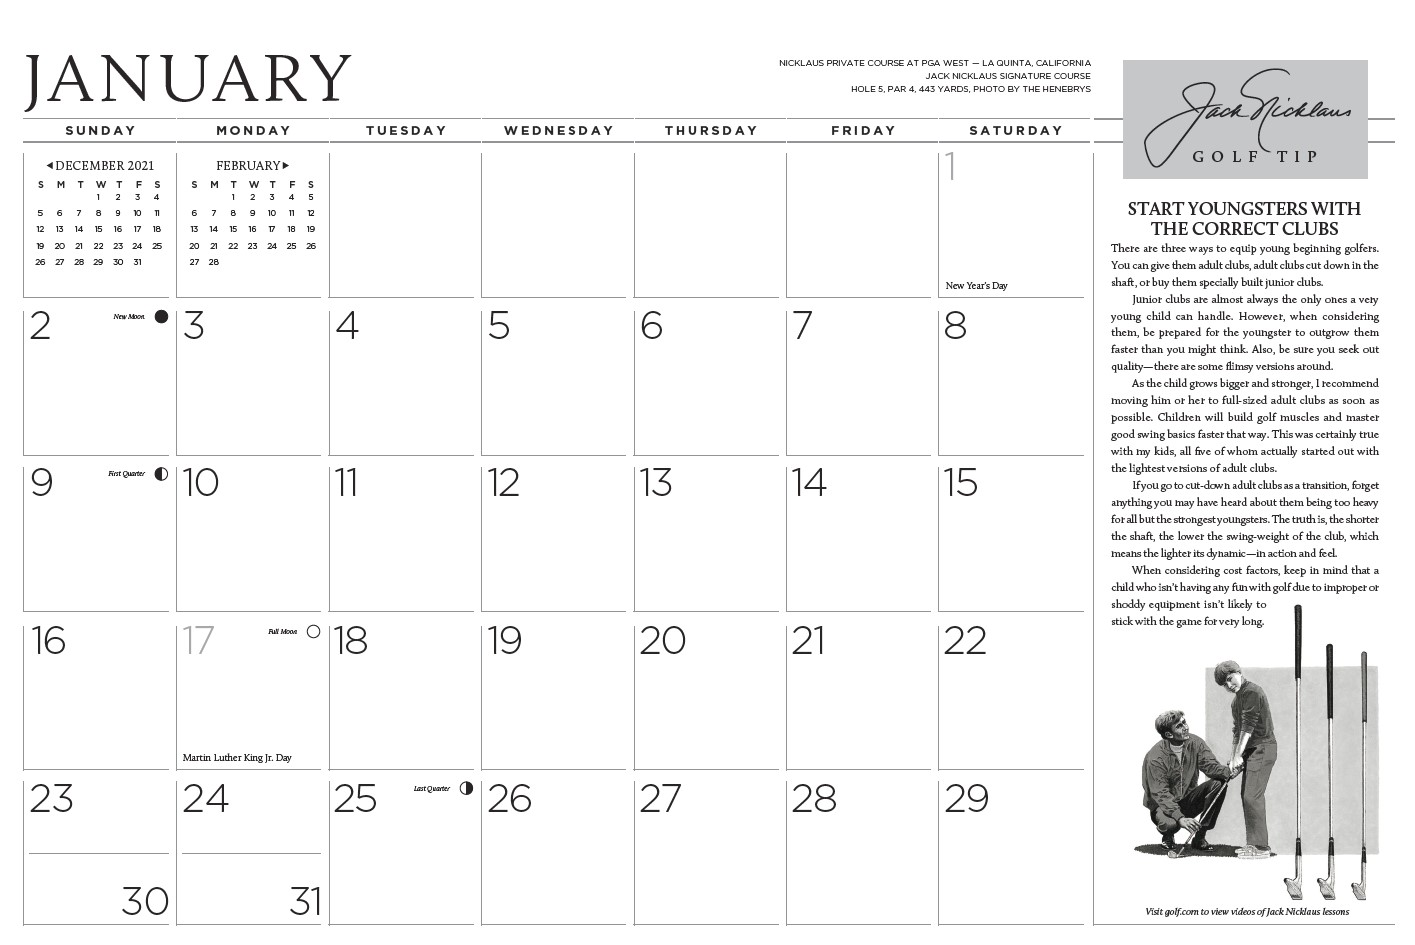 Nicklaus Golf Calendar - Datepad